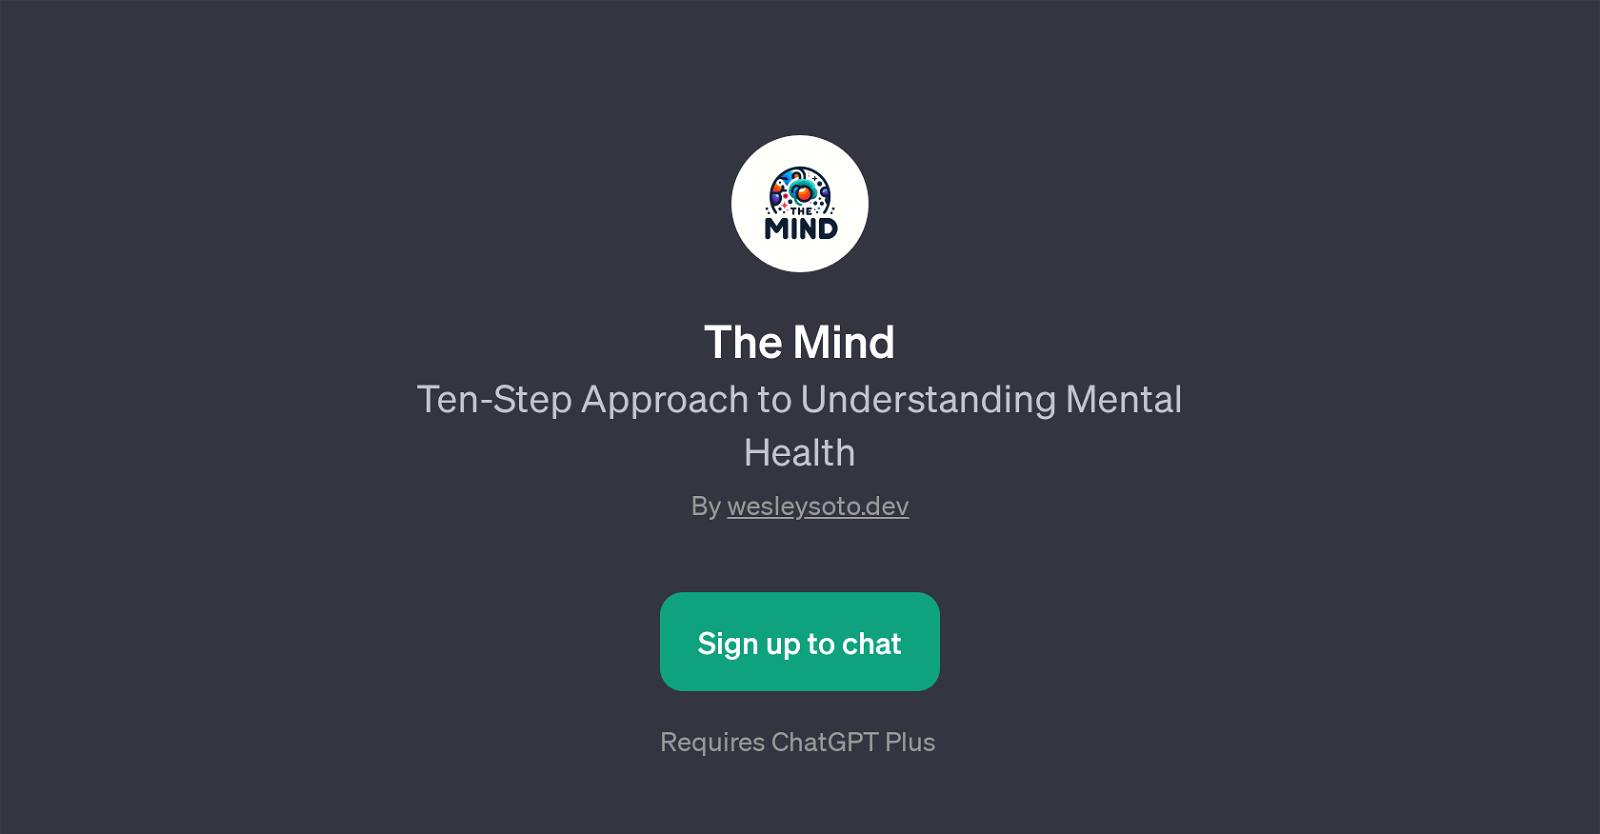 The Mind website